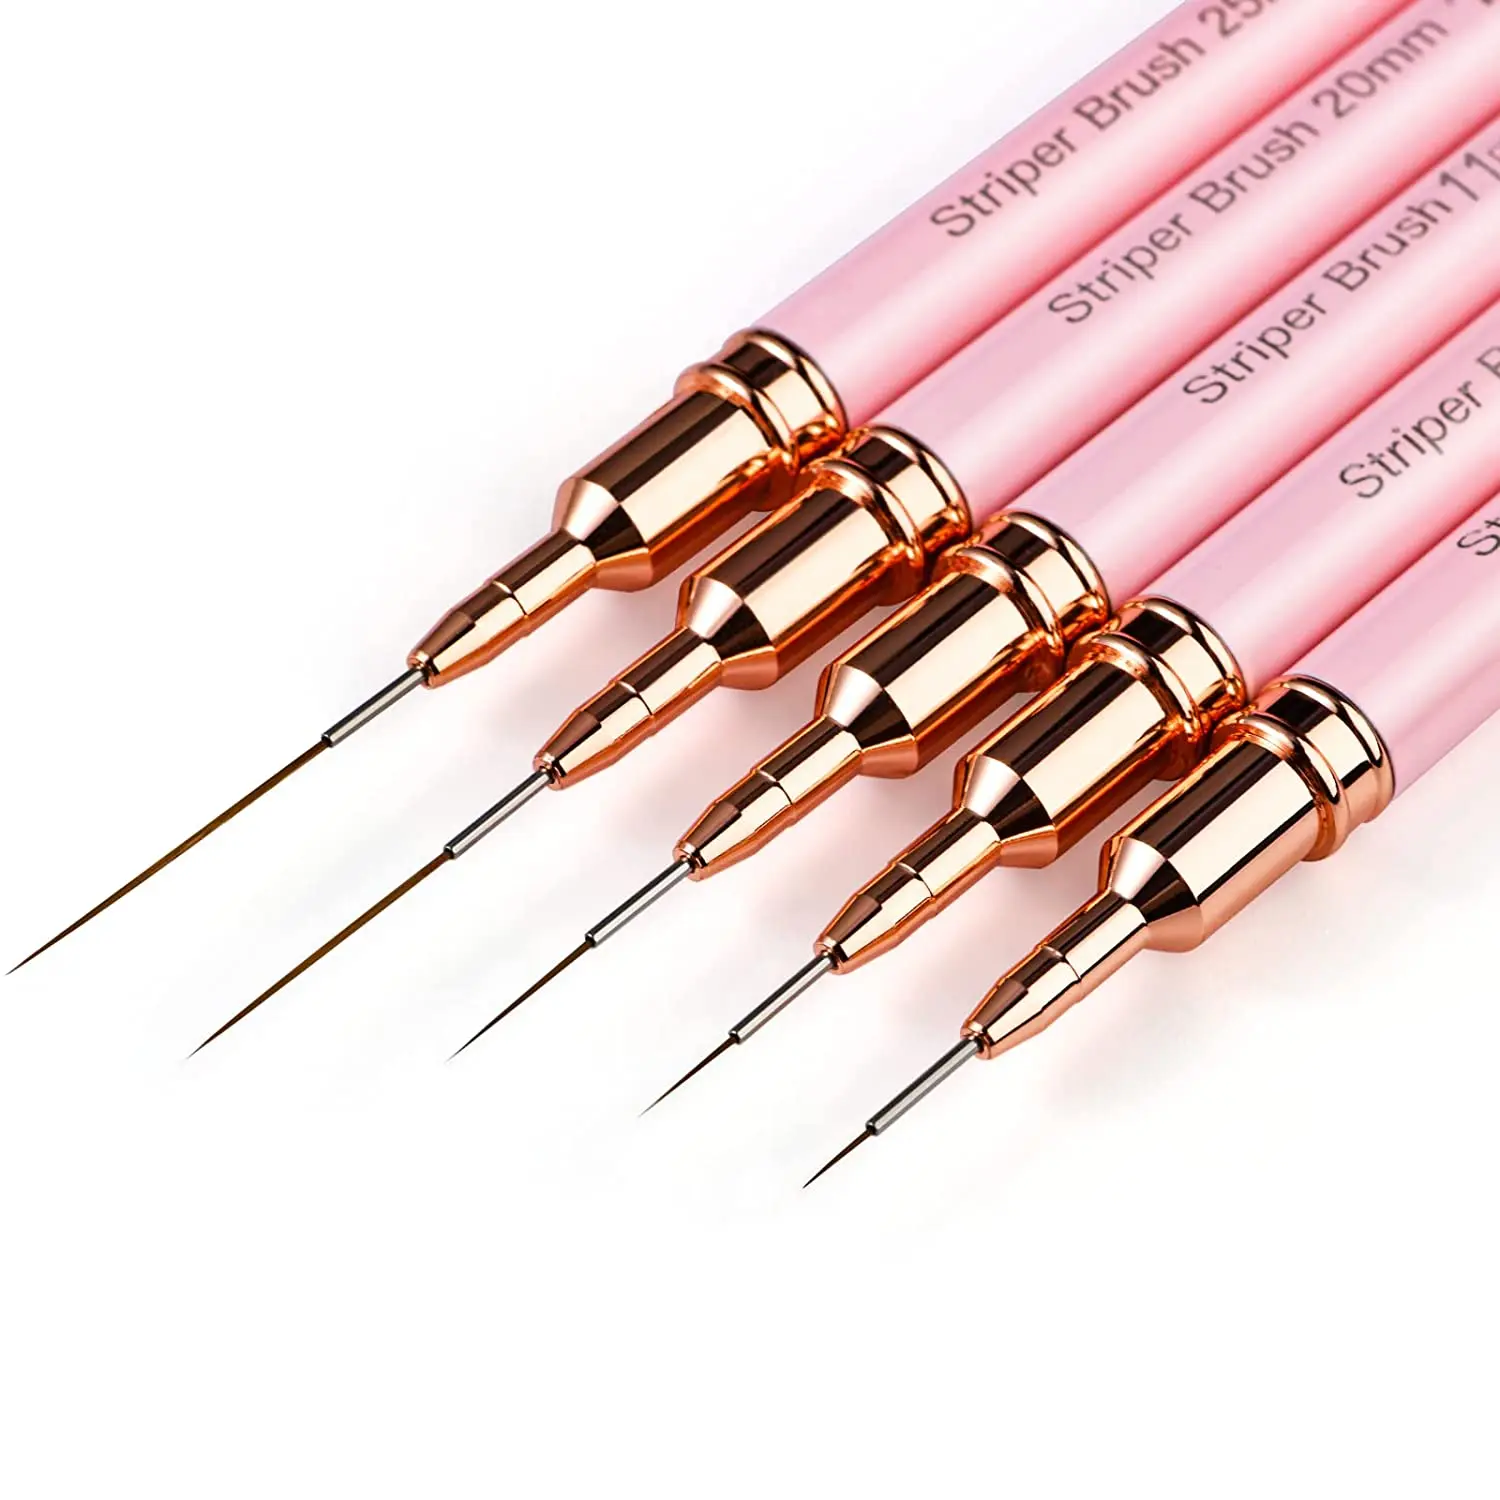 

Pink Striping Nail Art Brushes 5pcs Super Long Liner Needle Tube Brush Set Nail Art Fine Designs-Sizes 5/7/11/20/25mm